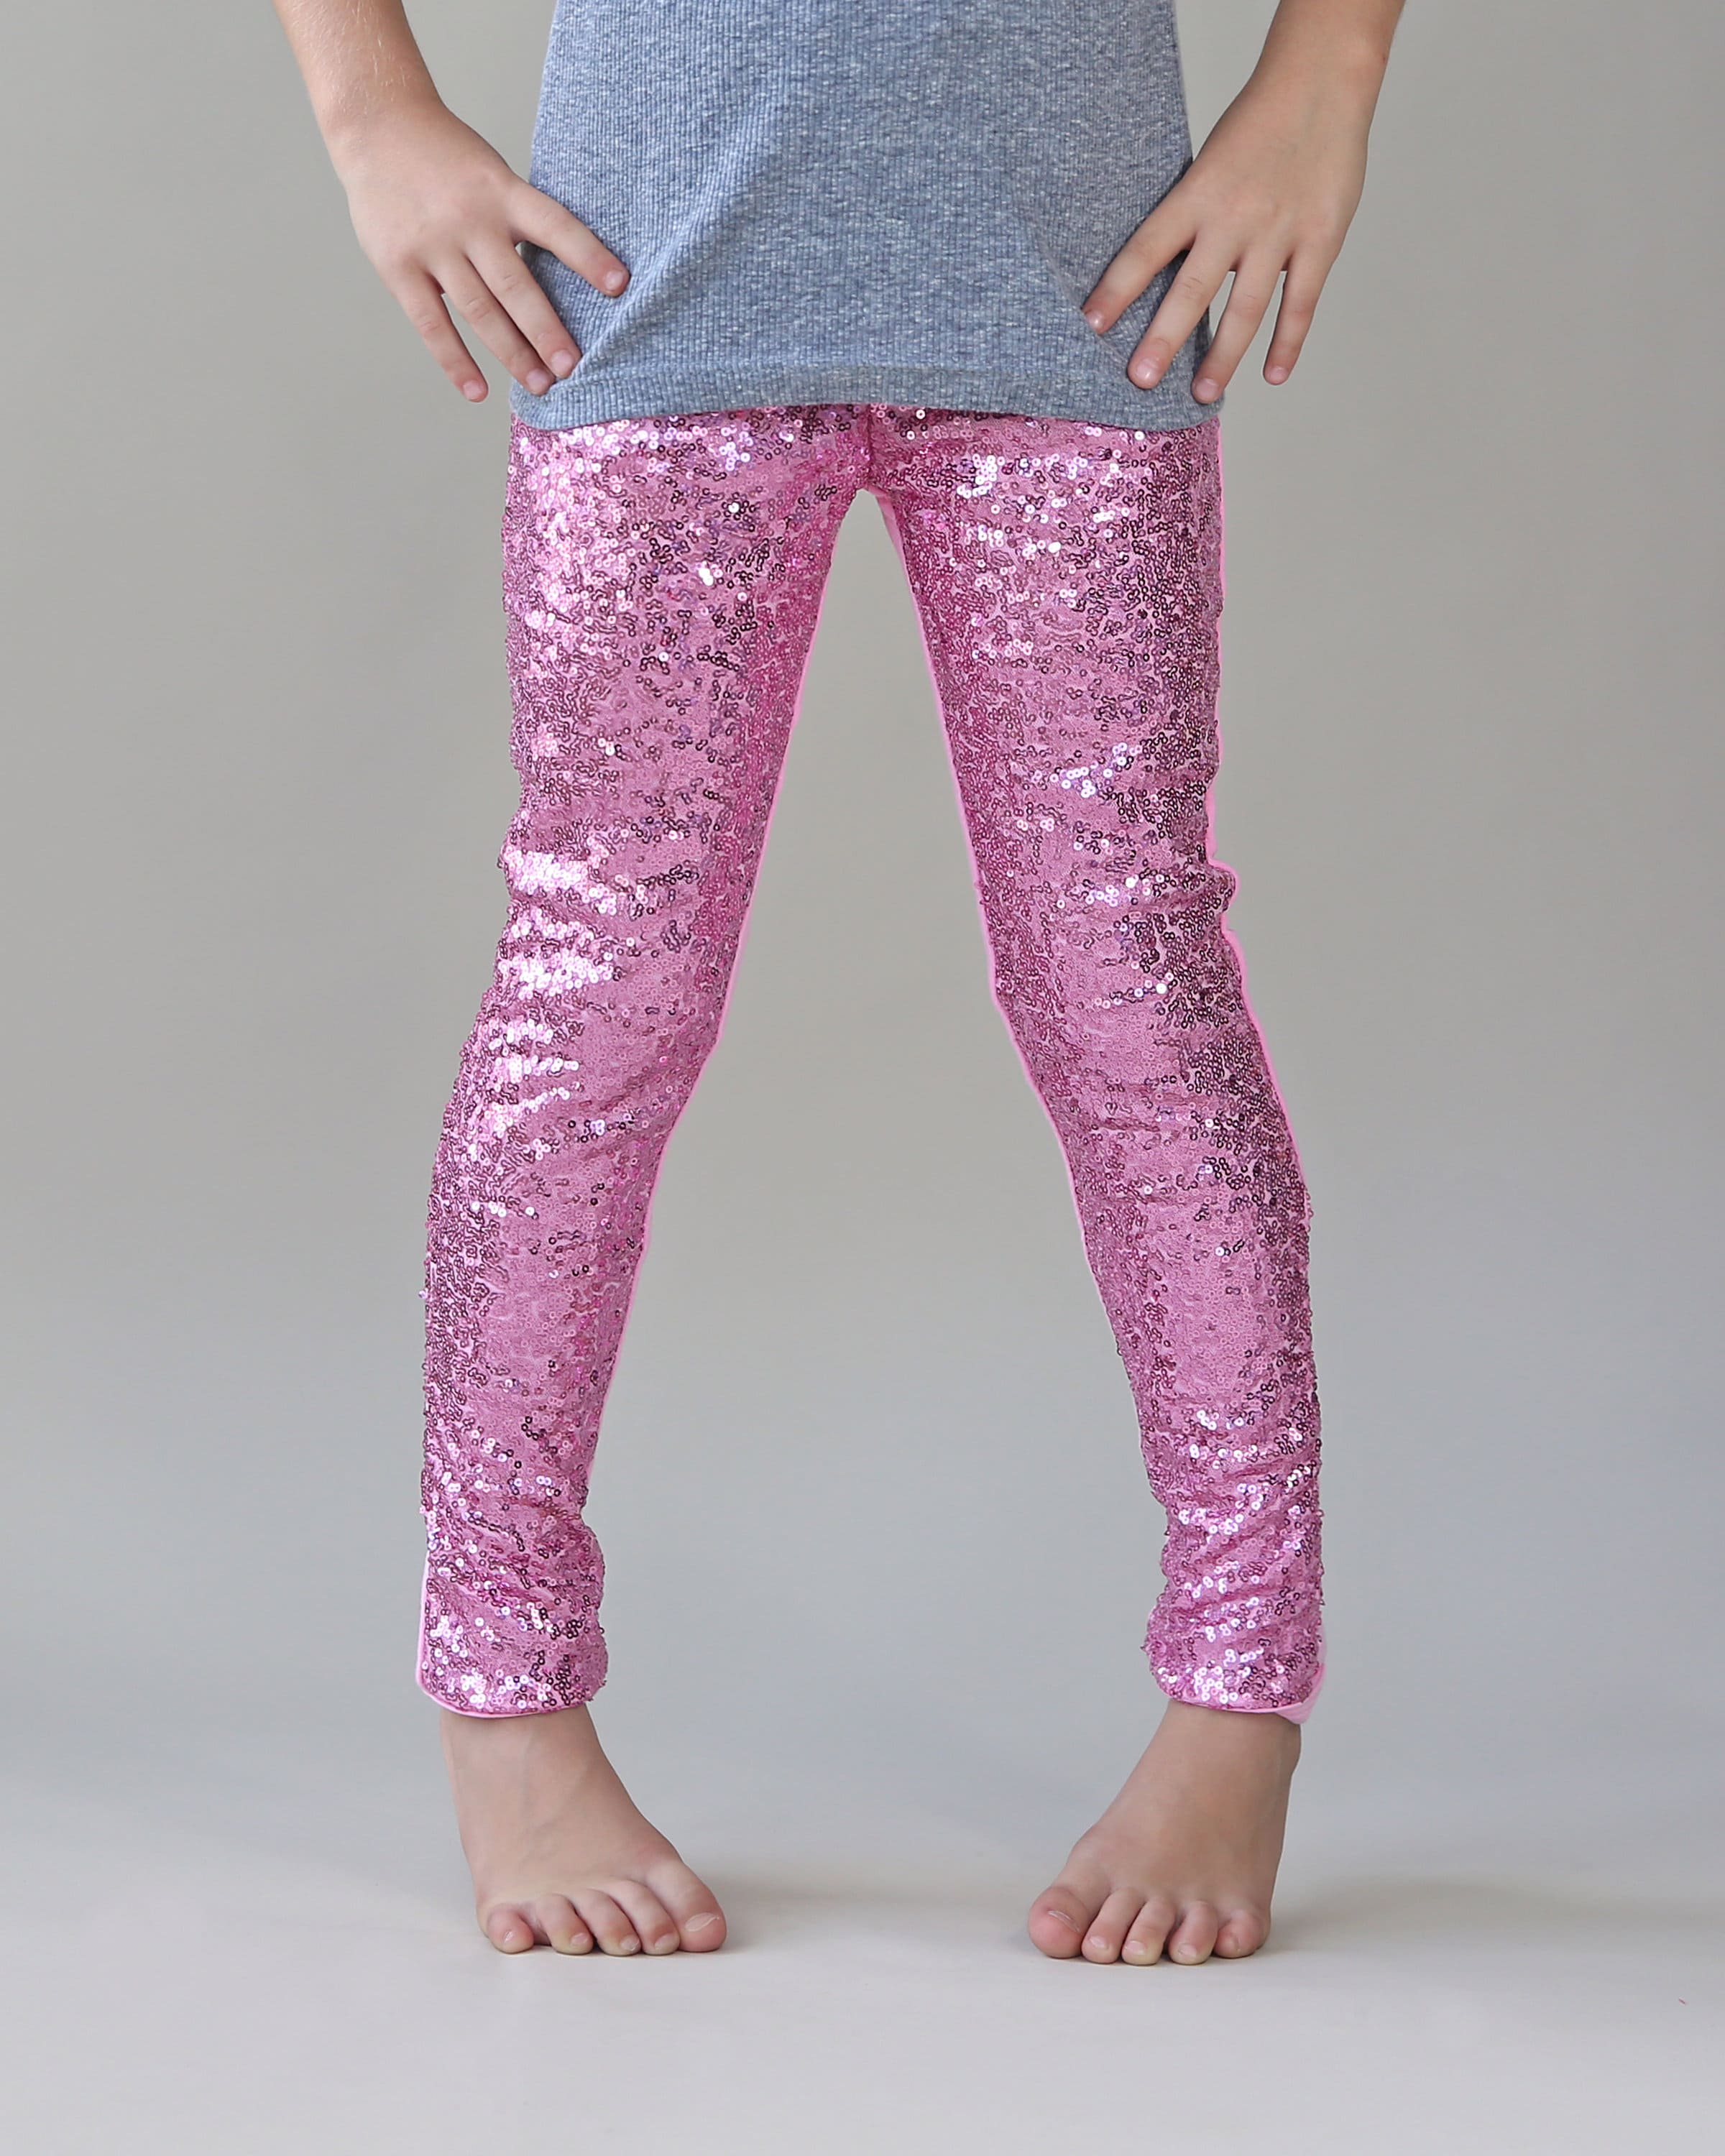  Leggings for Women Neon Pink Solid Wideband Waist